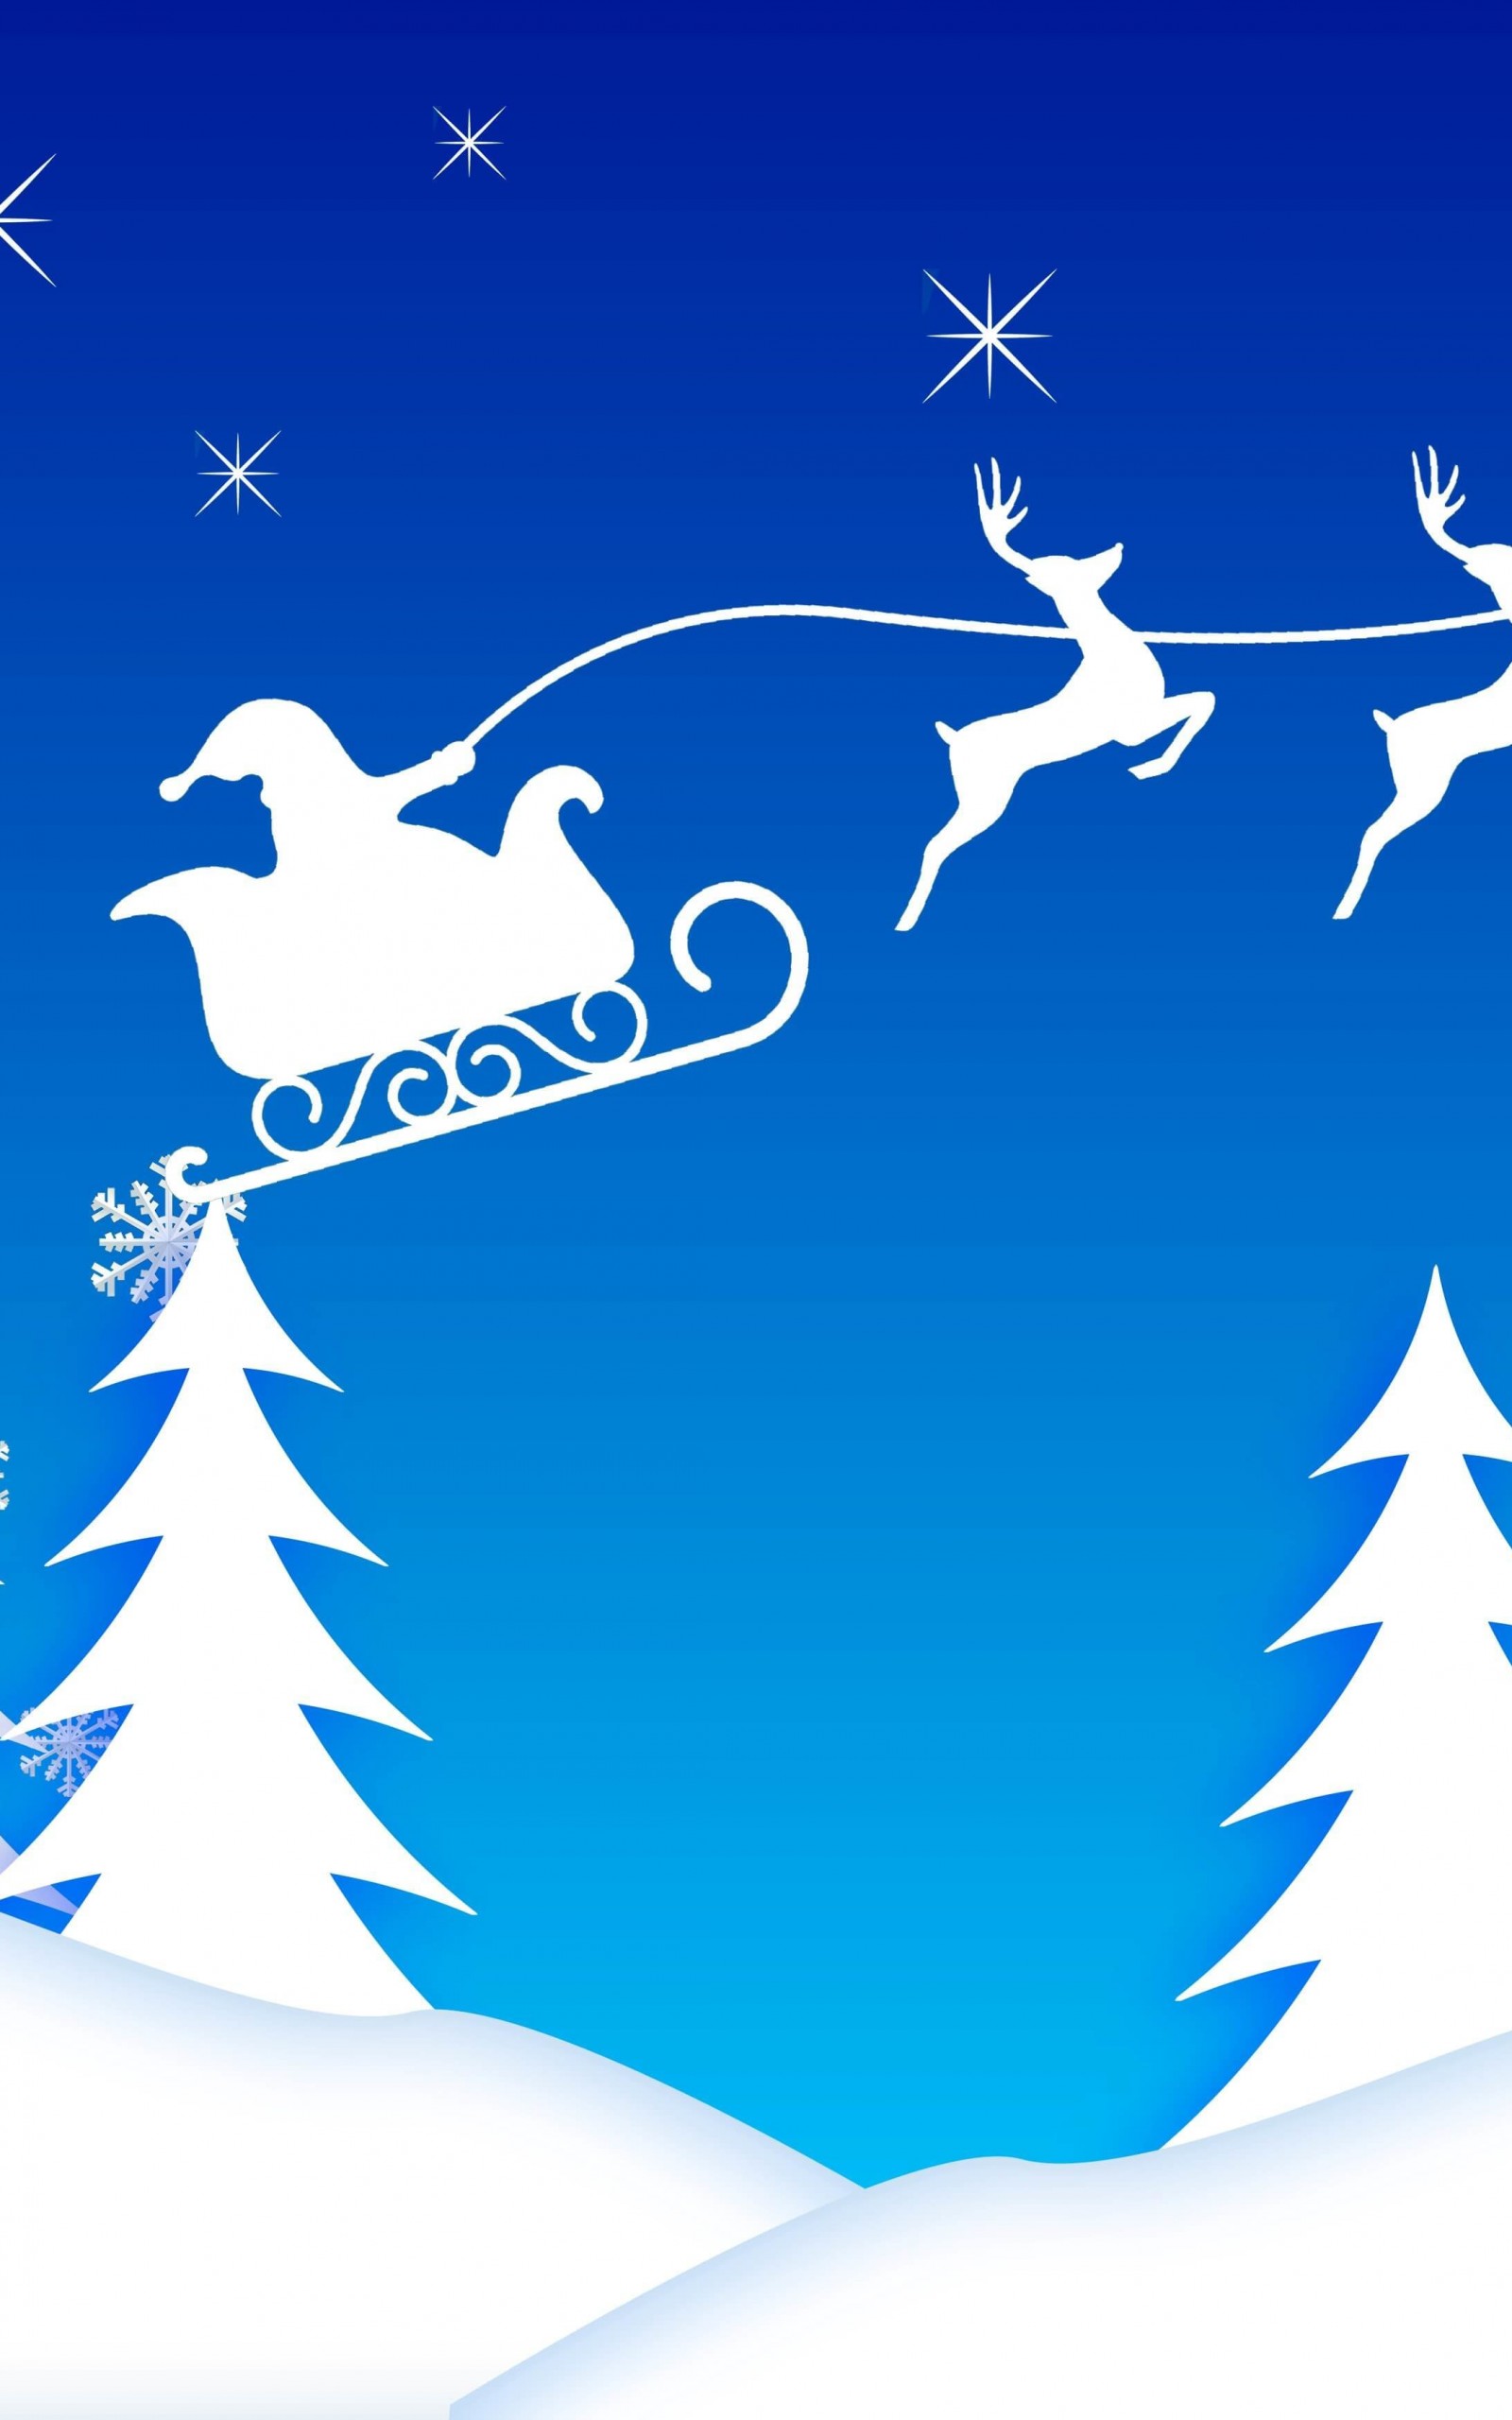 Santa’s Sleigh Illustration Wallpaper for Amazon Kindle Fire HDX 8.9